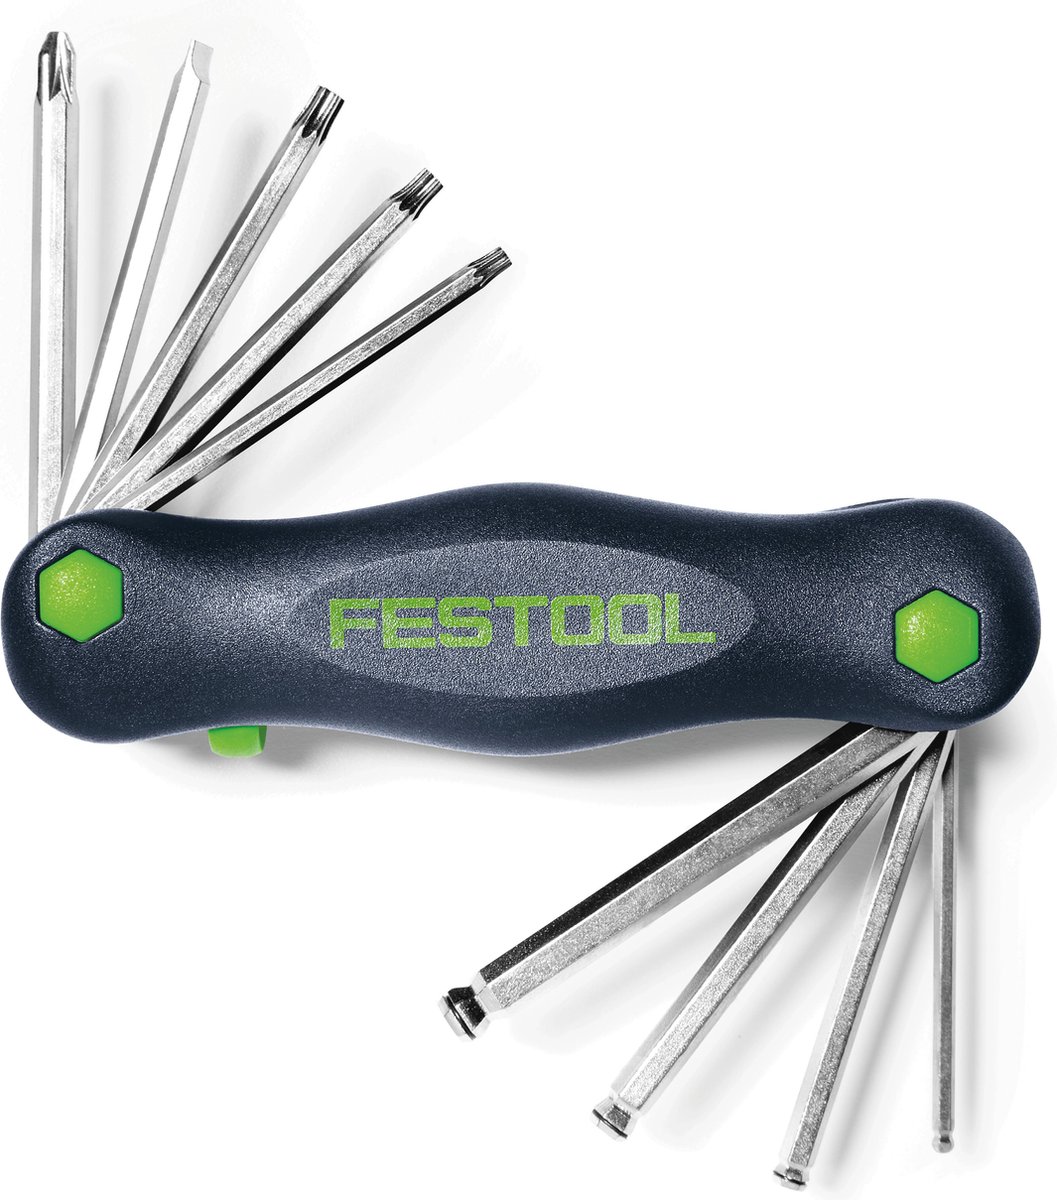 Festool Toolie multifunctioneel gereedschap - 498863 | bol.com